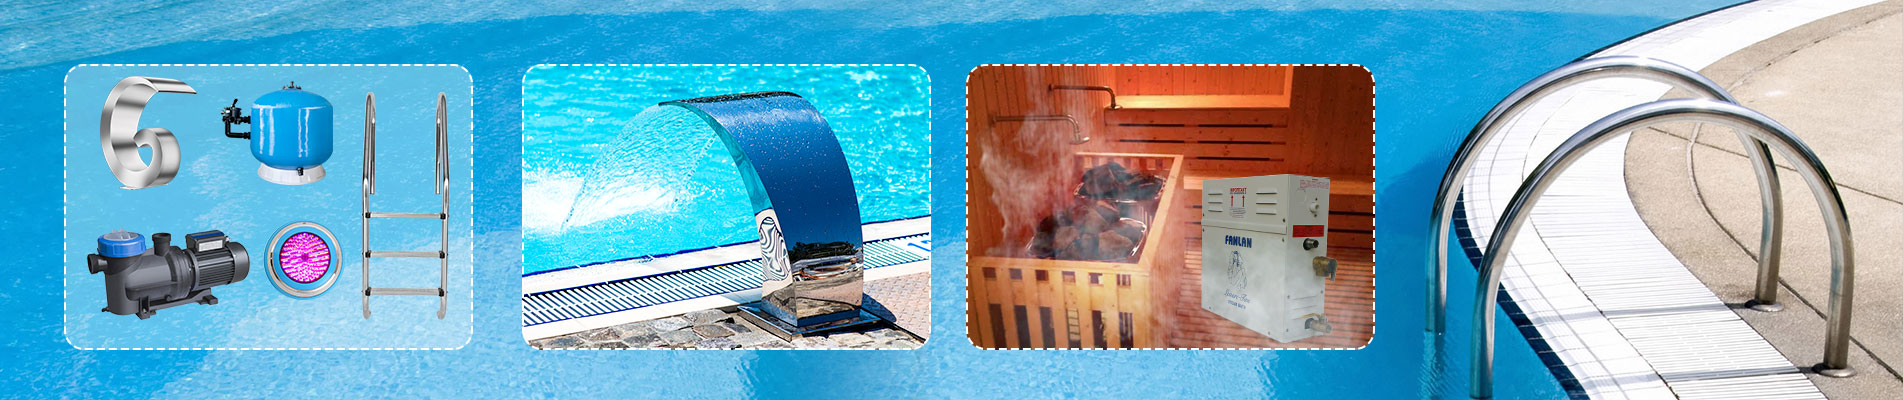 Fenlin Pool Sauna Spa Water Park Equipment